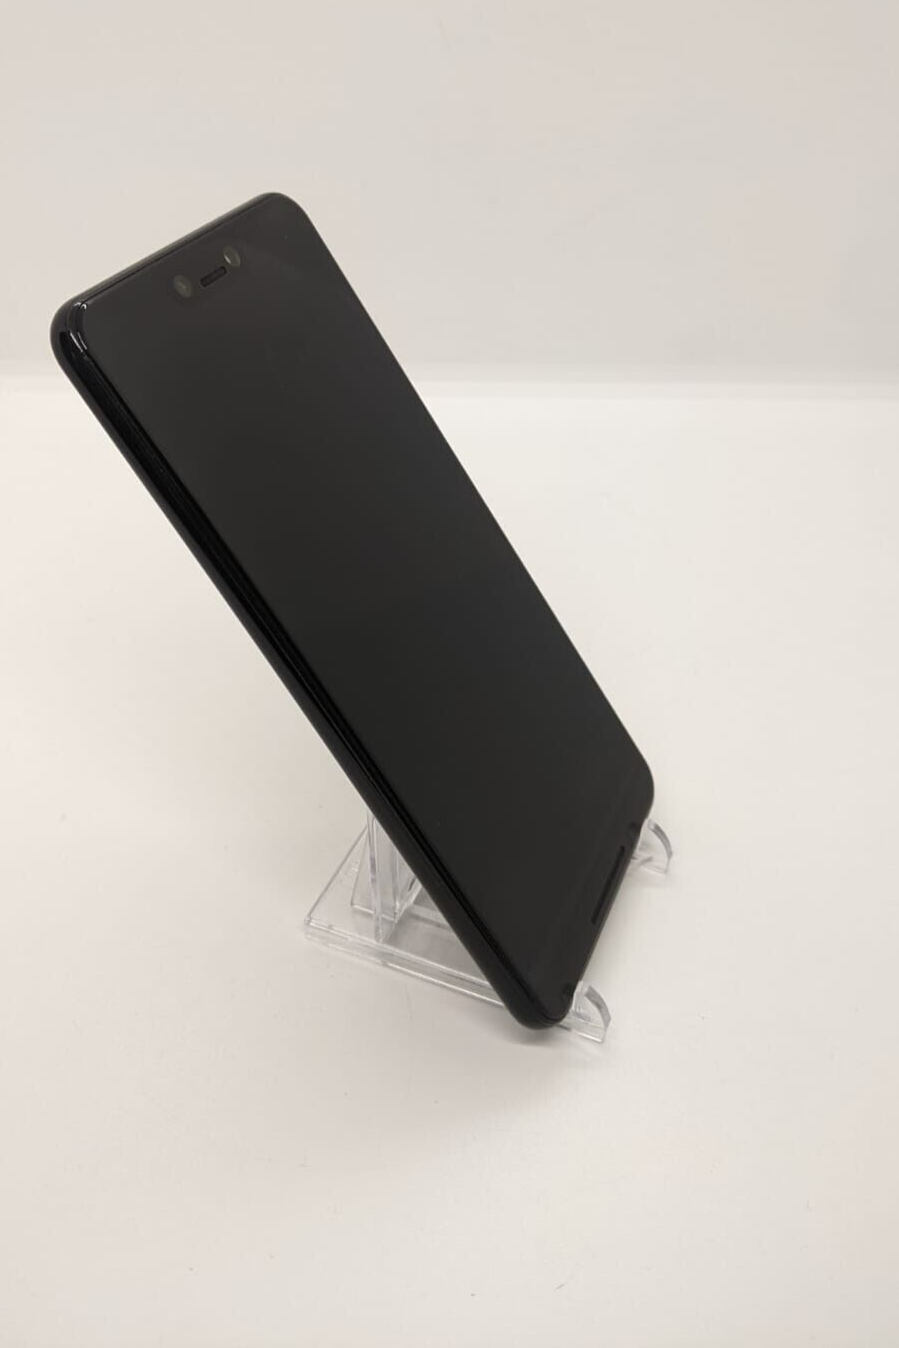 Google Pixel 3 XL 64GB Unlocked 4G LTE Black Smartphone G013C